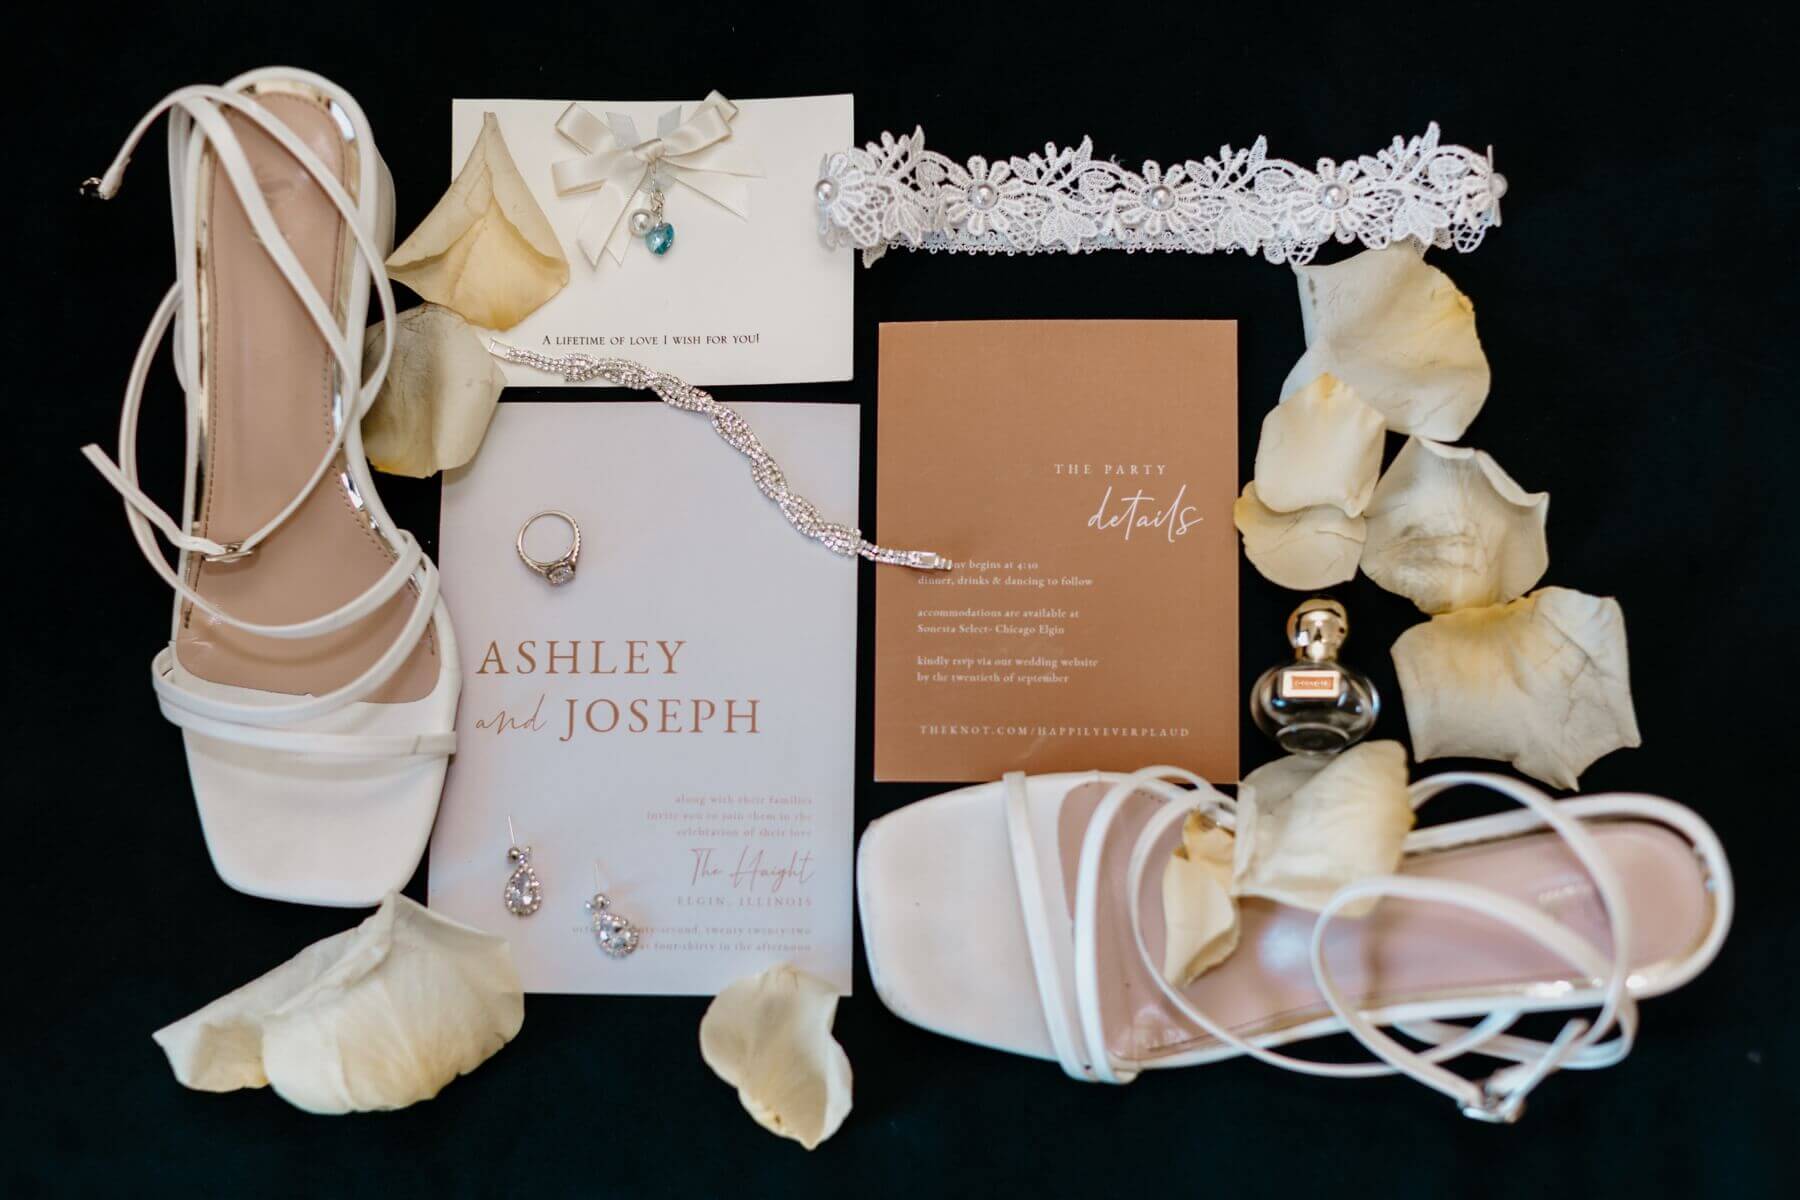 Boho wedding invitation with white satin wedding shoes, garter, and rings